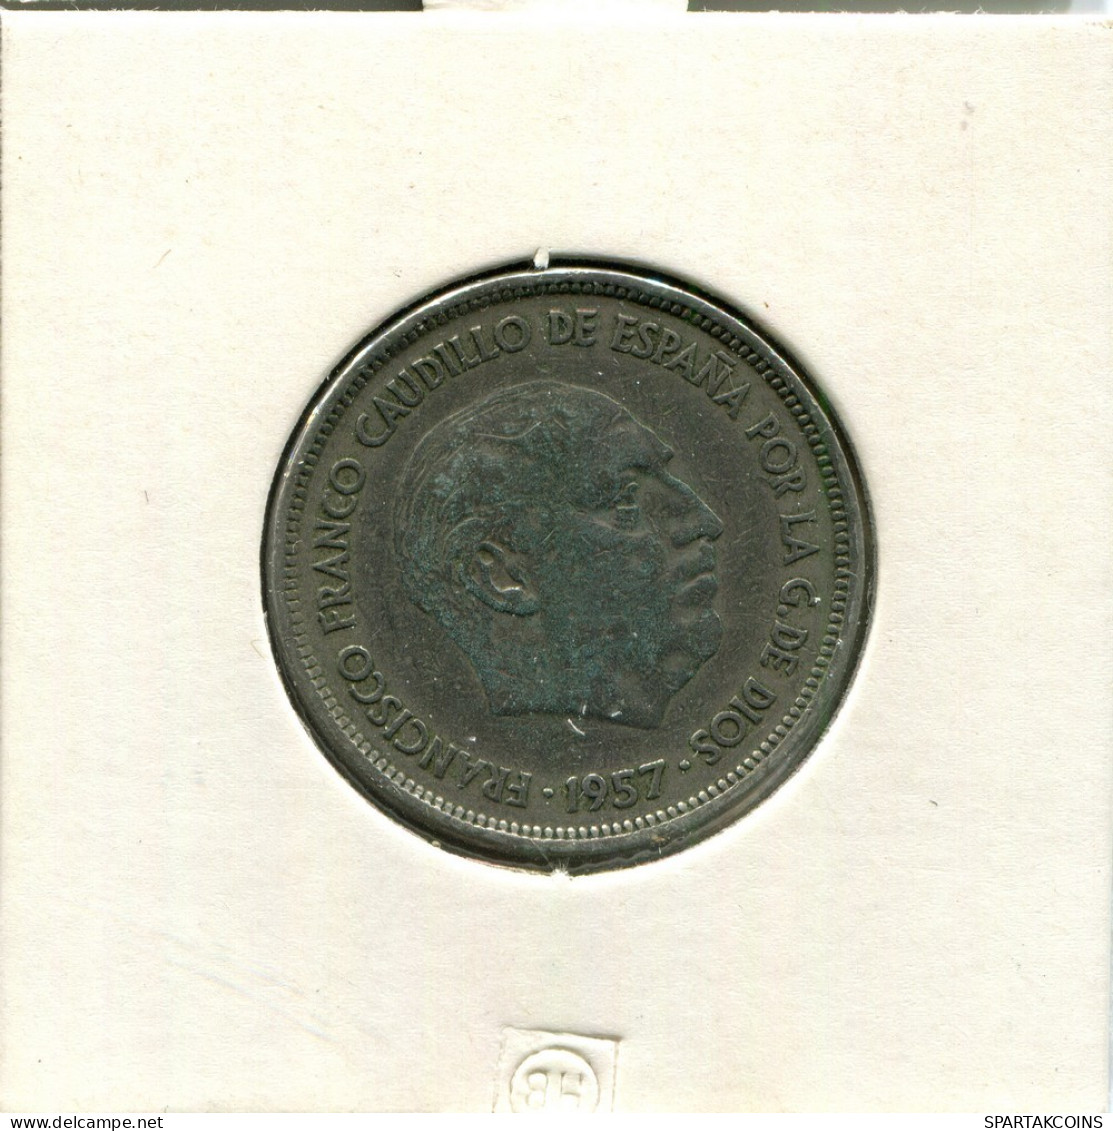 25 PESETAS 1958 SPAIN Coin #AT860.U.A - 25 Pesetas